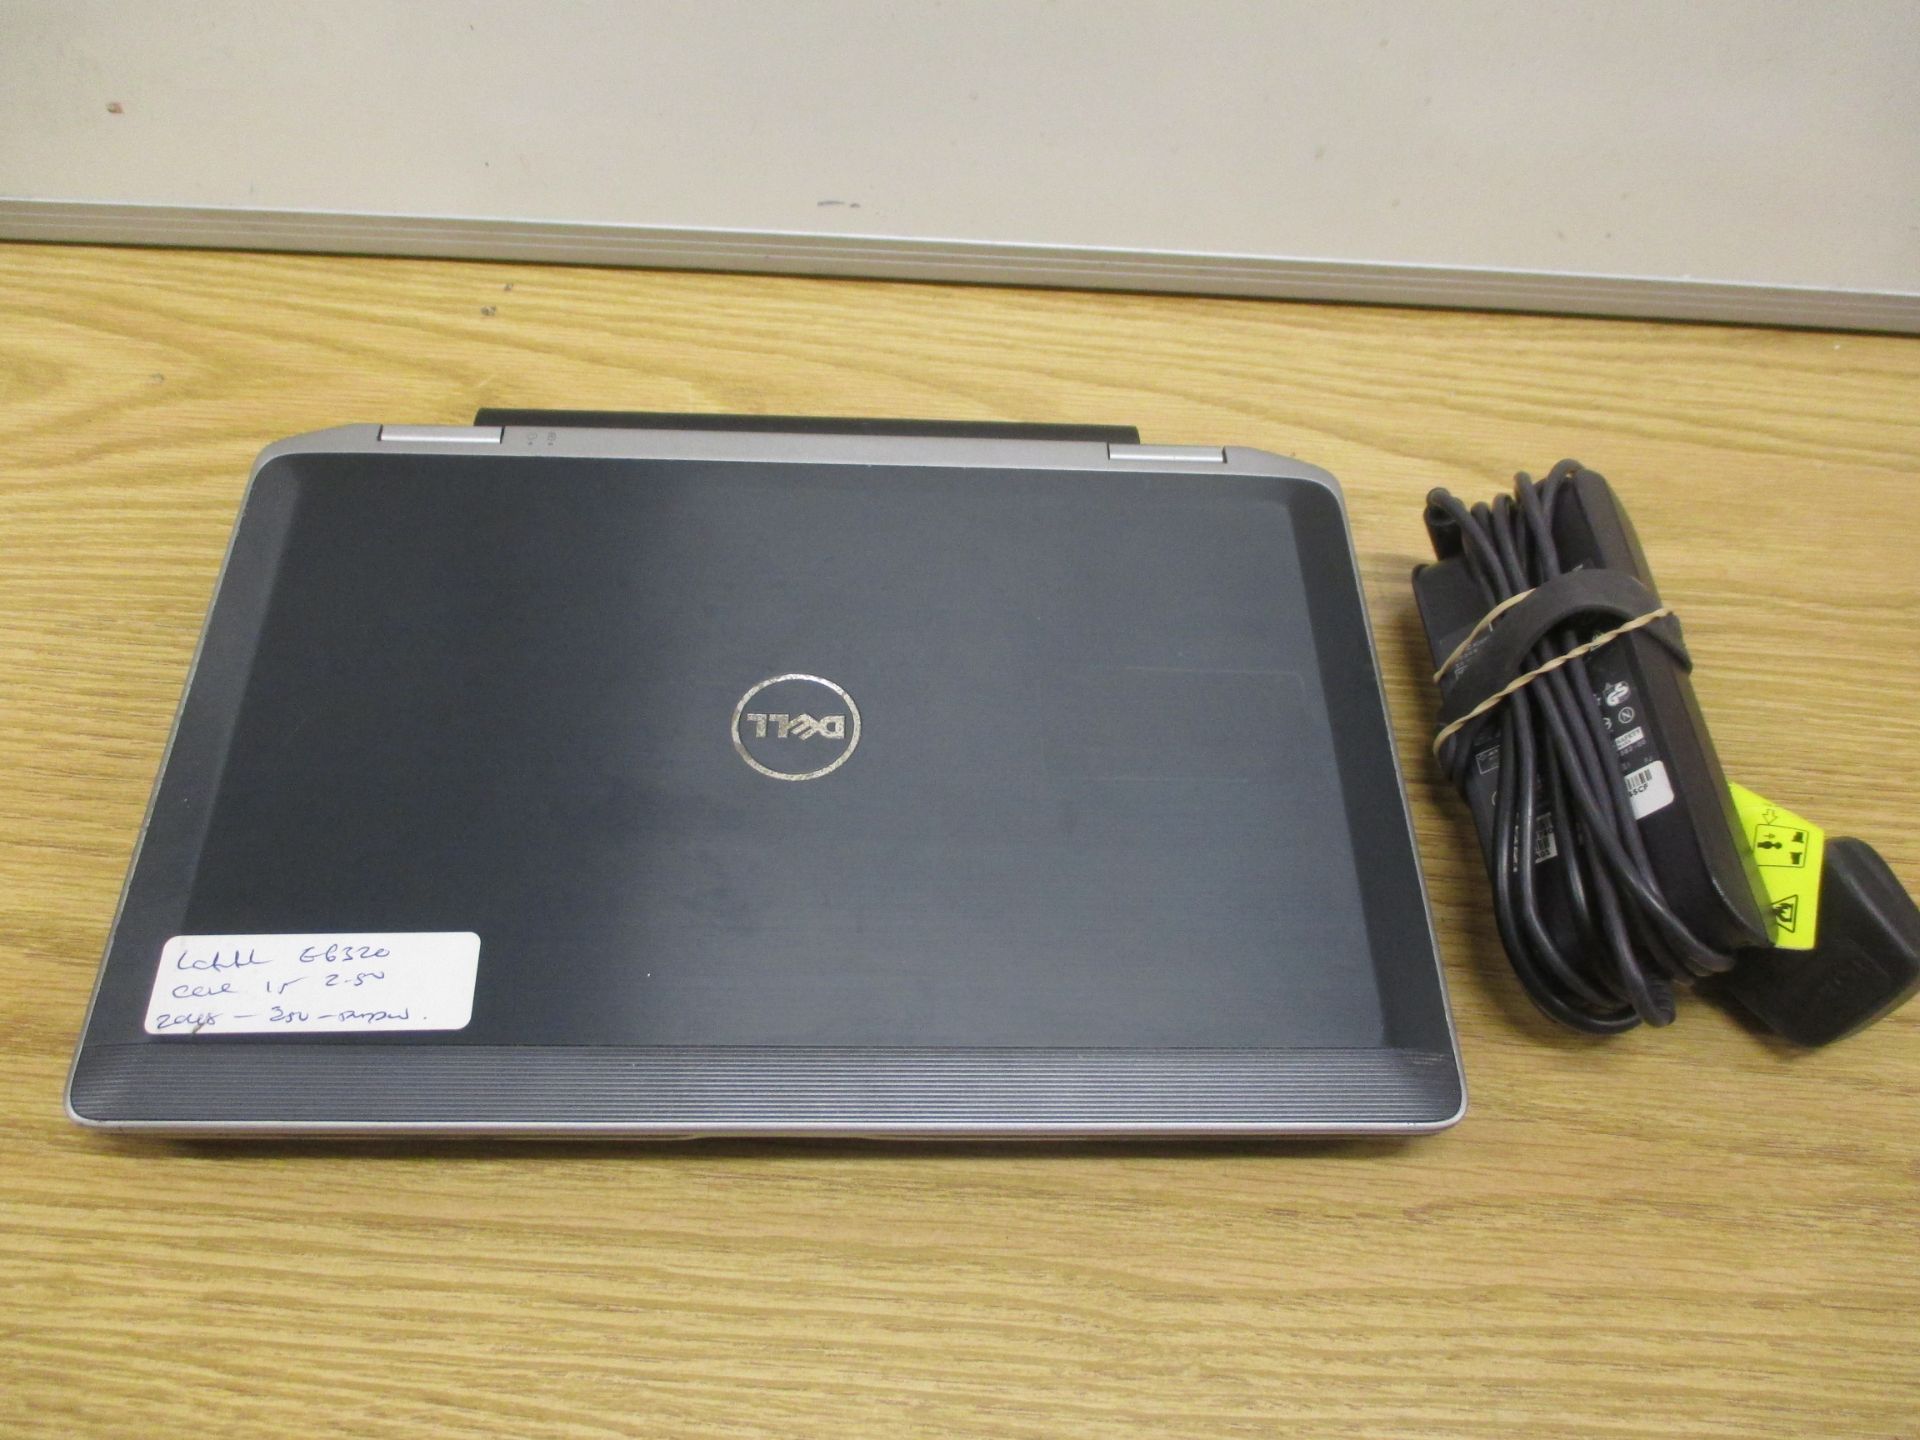 Dell Latitude E6320 Laptop, Core-i5/2.5Ghz, 2Gb Ram/250Gb HDD, DVDRW, with psu - Win 7 Ult COA - Image 2 of 2